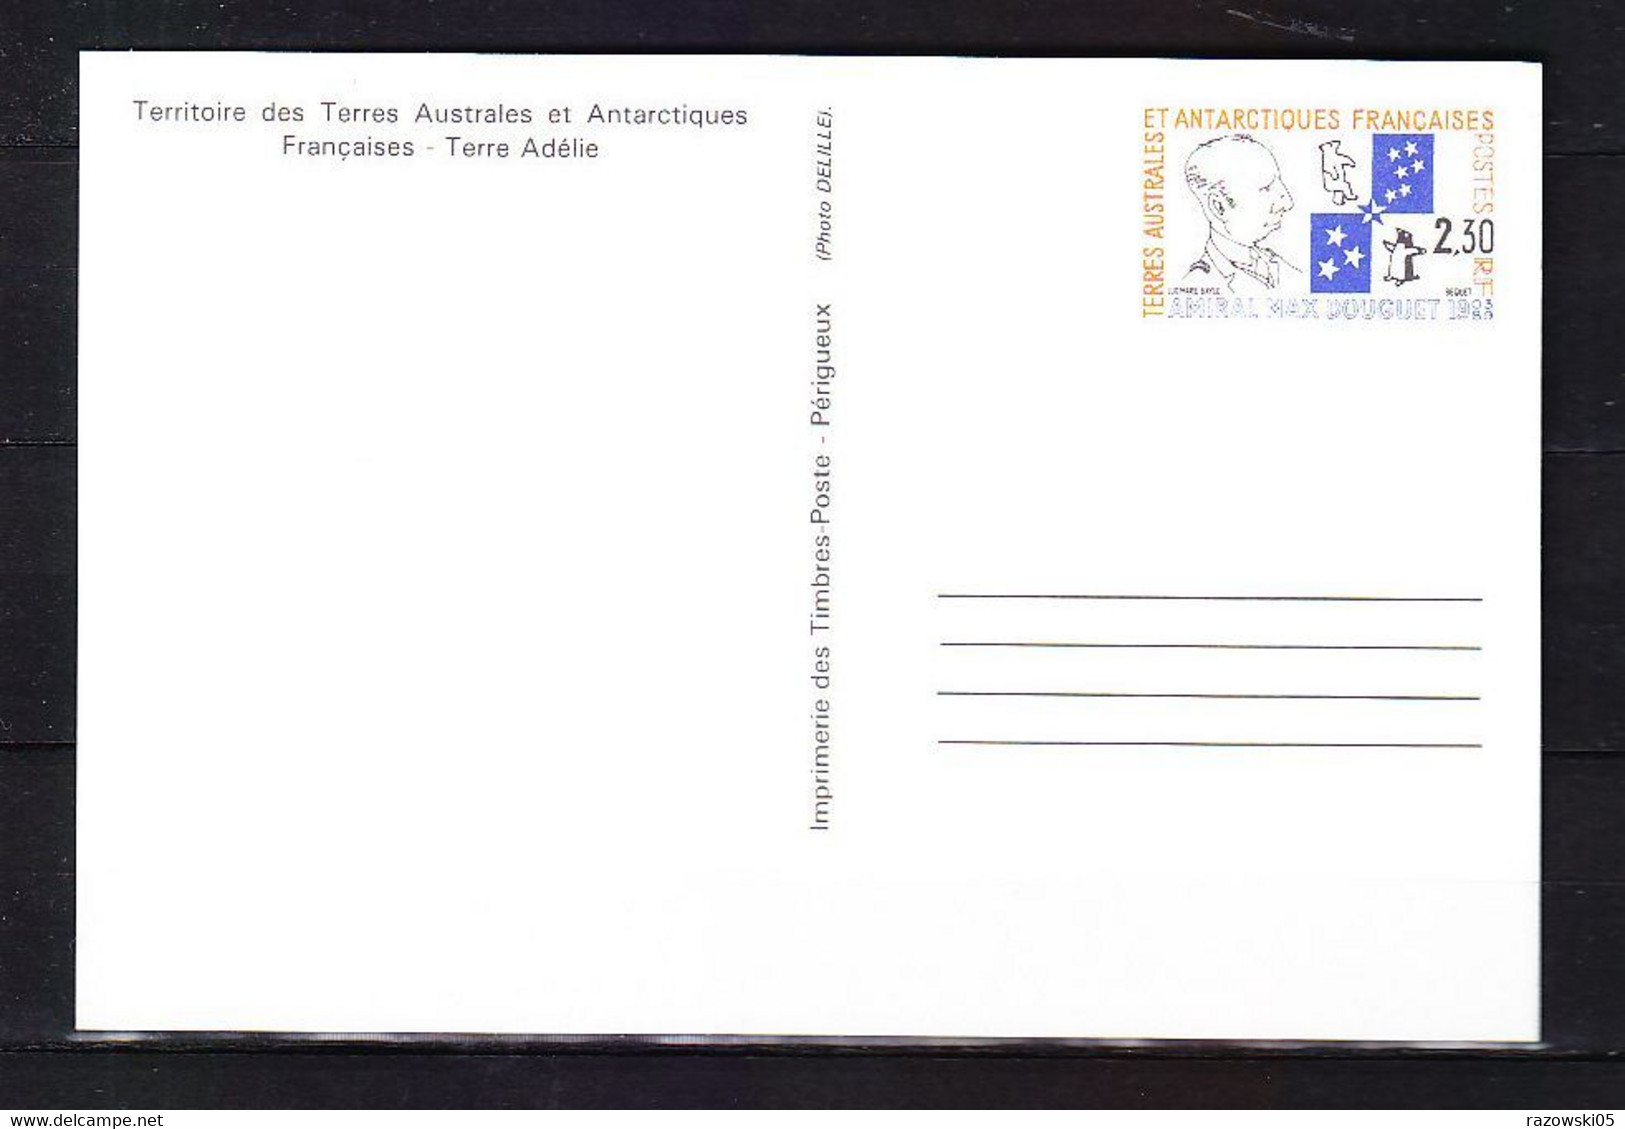 FRANCE TIMBRE. . . . . . . . . . . . . . . . . .  CARTE POSTALE ENTIER POSTAL TERRES AUSTRALES ANTARCTIQUES TERRE ADELIE - Postal Stationery